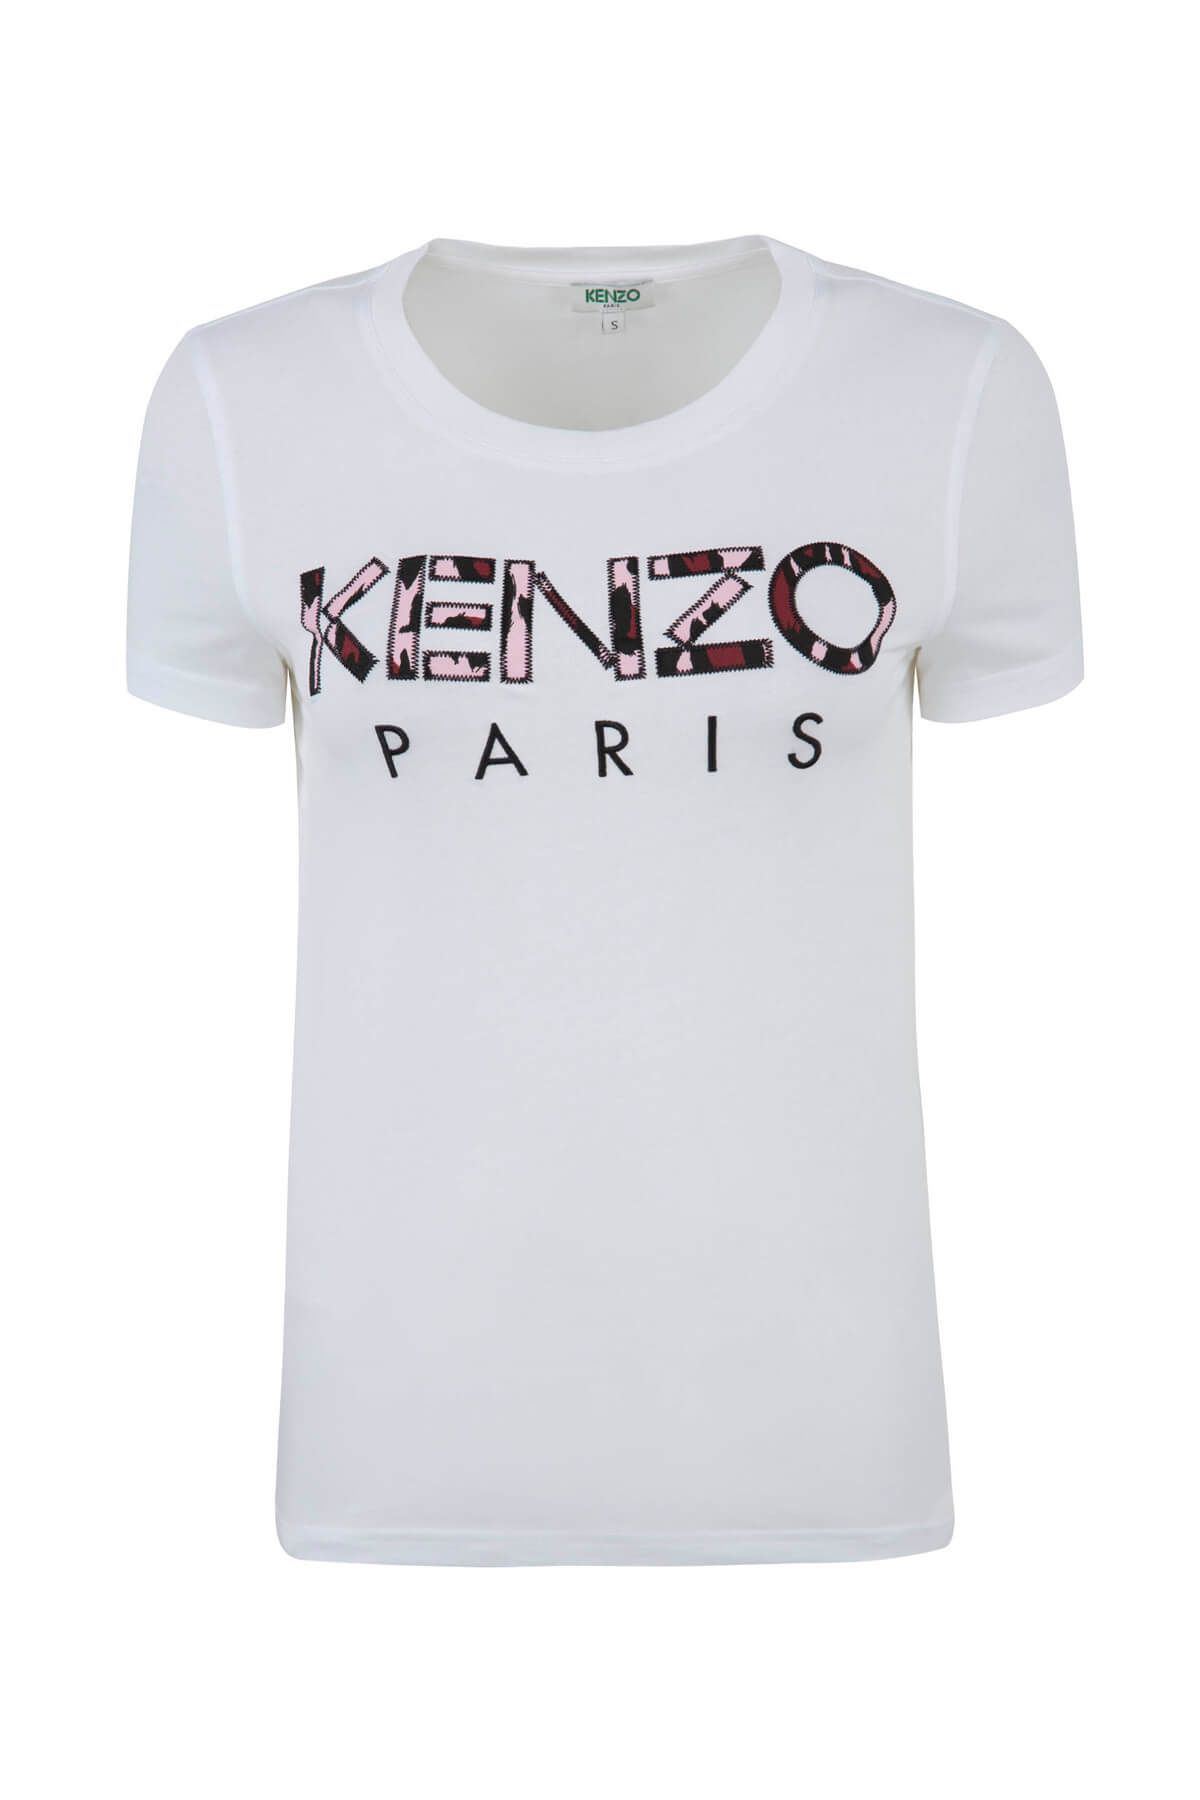 Kenzo Kadın Beyaz T-Shirt F86 2Ts721 993 01